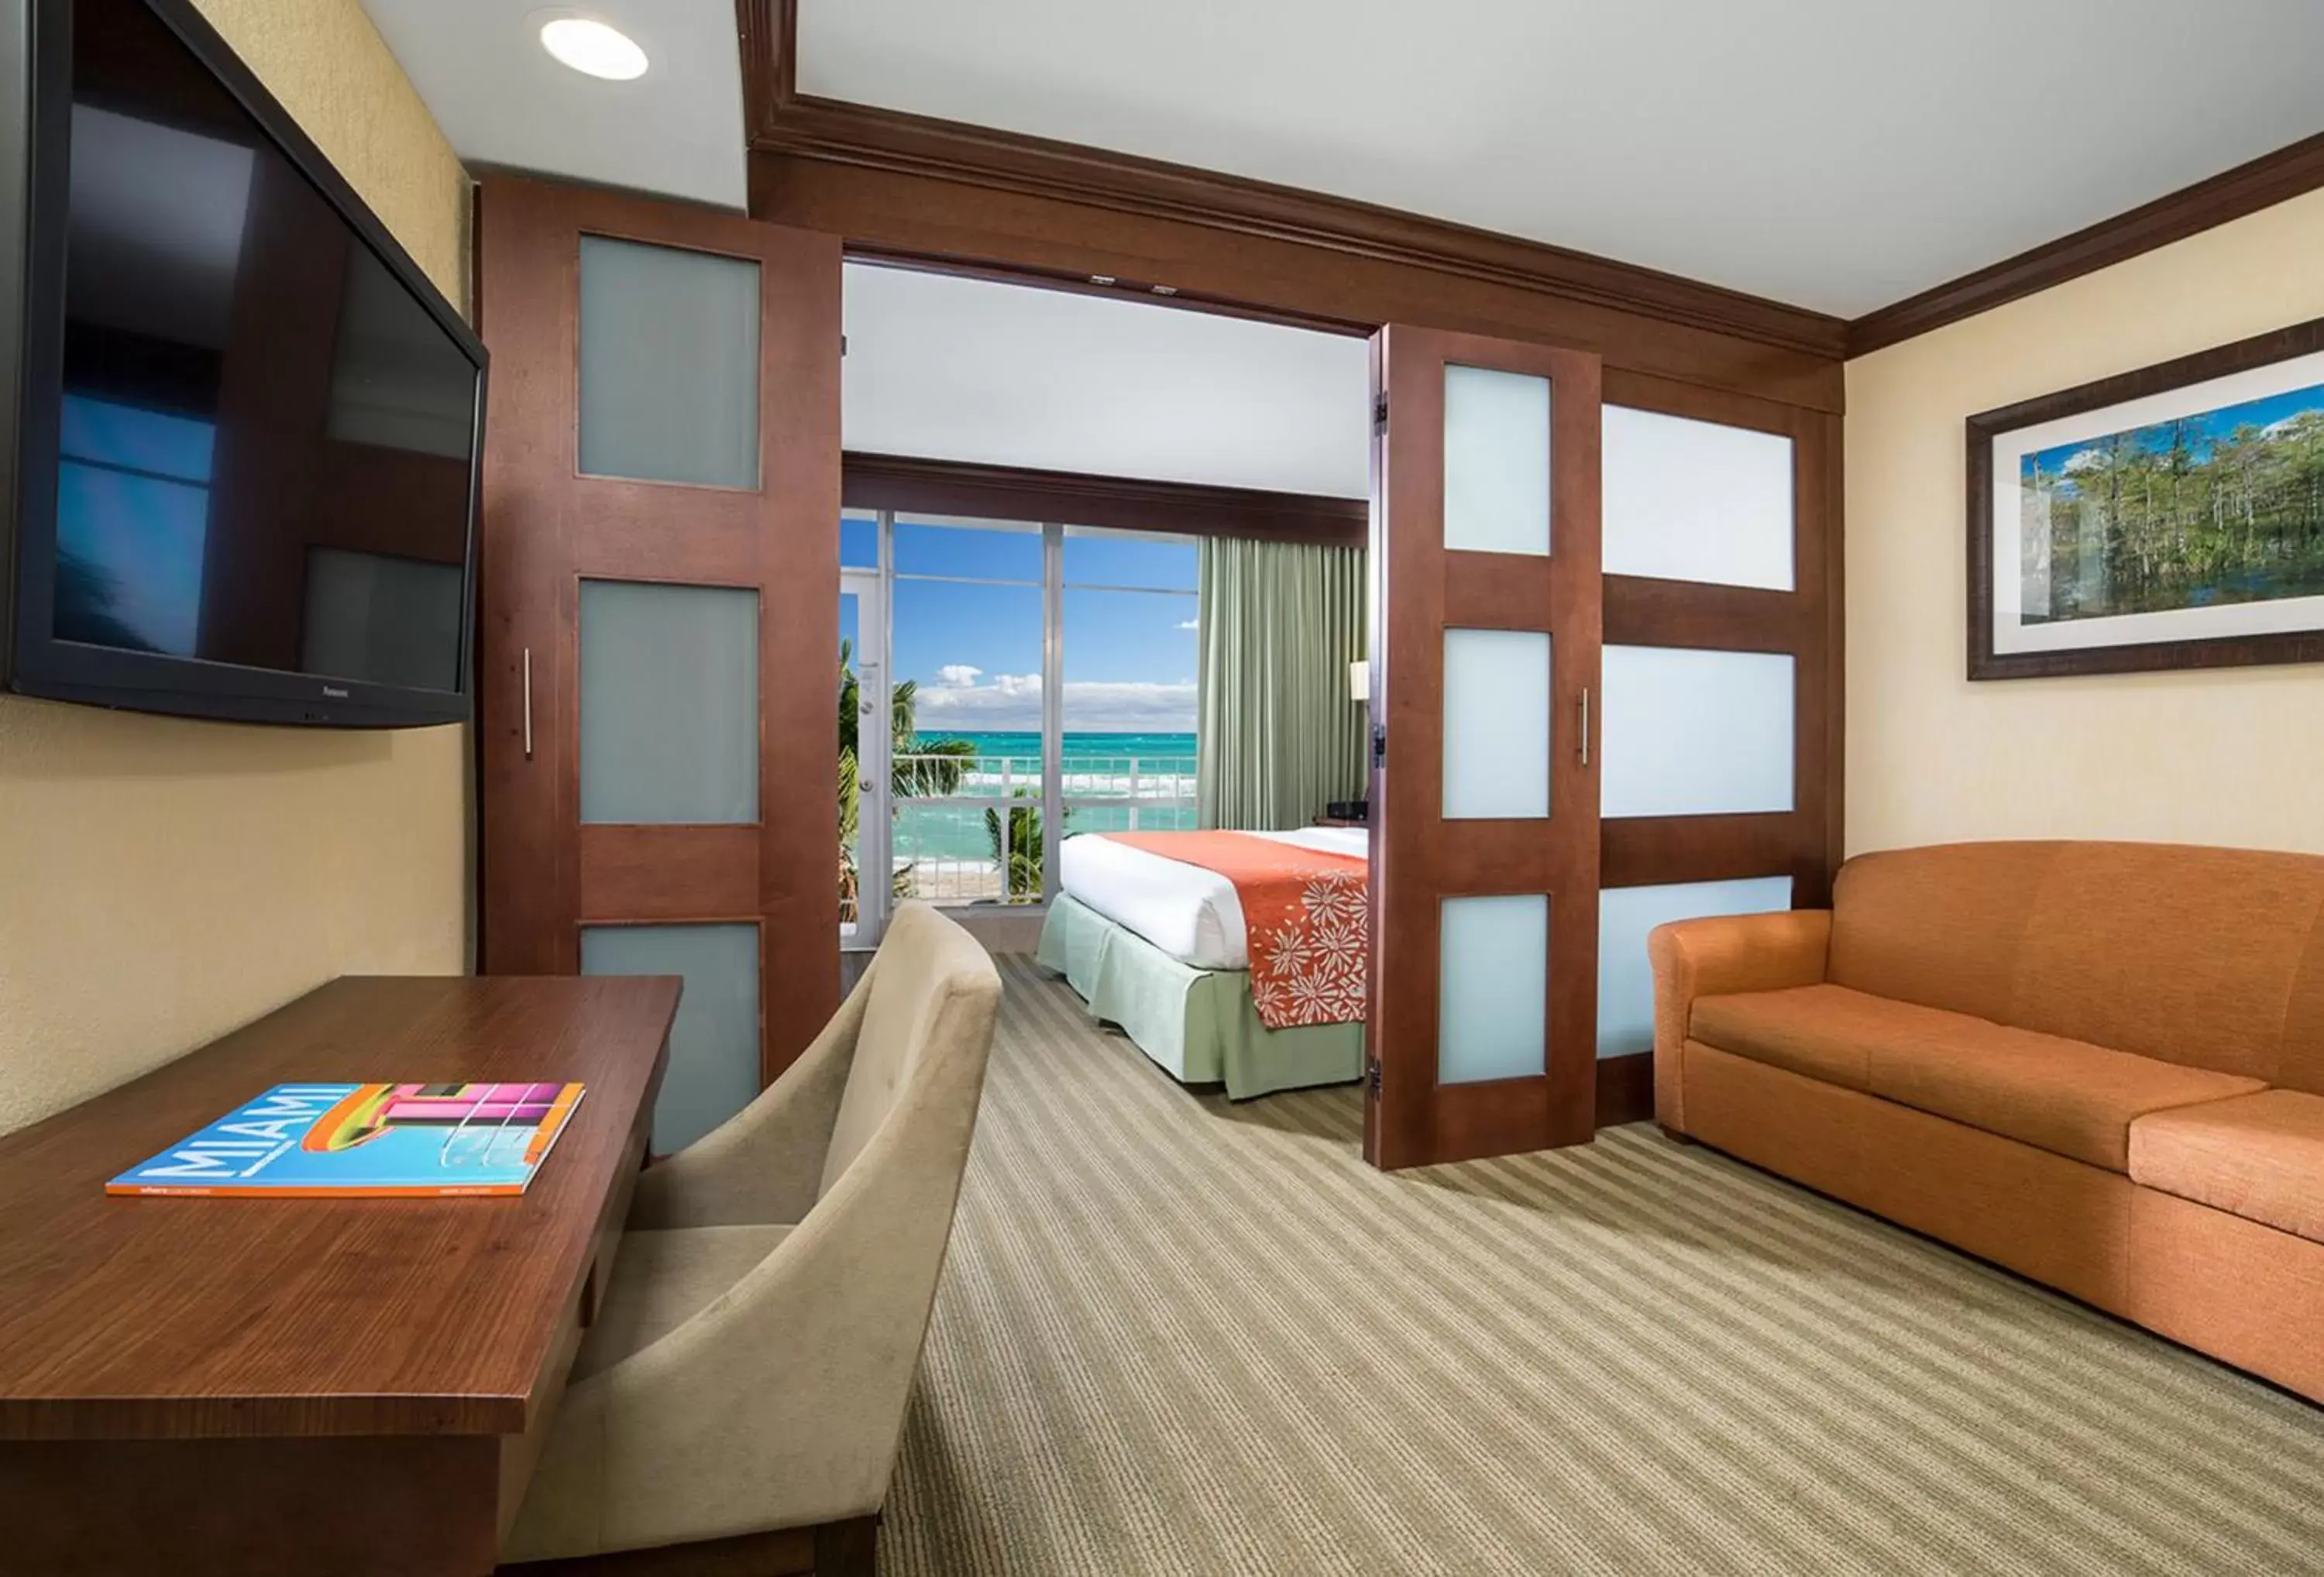 TV and multimedia, Seating Area in Newport Beachside Hotel & Resort